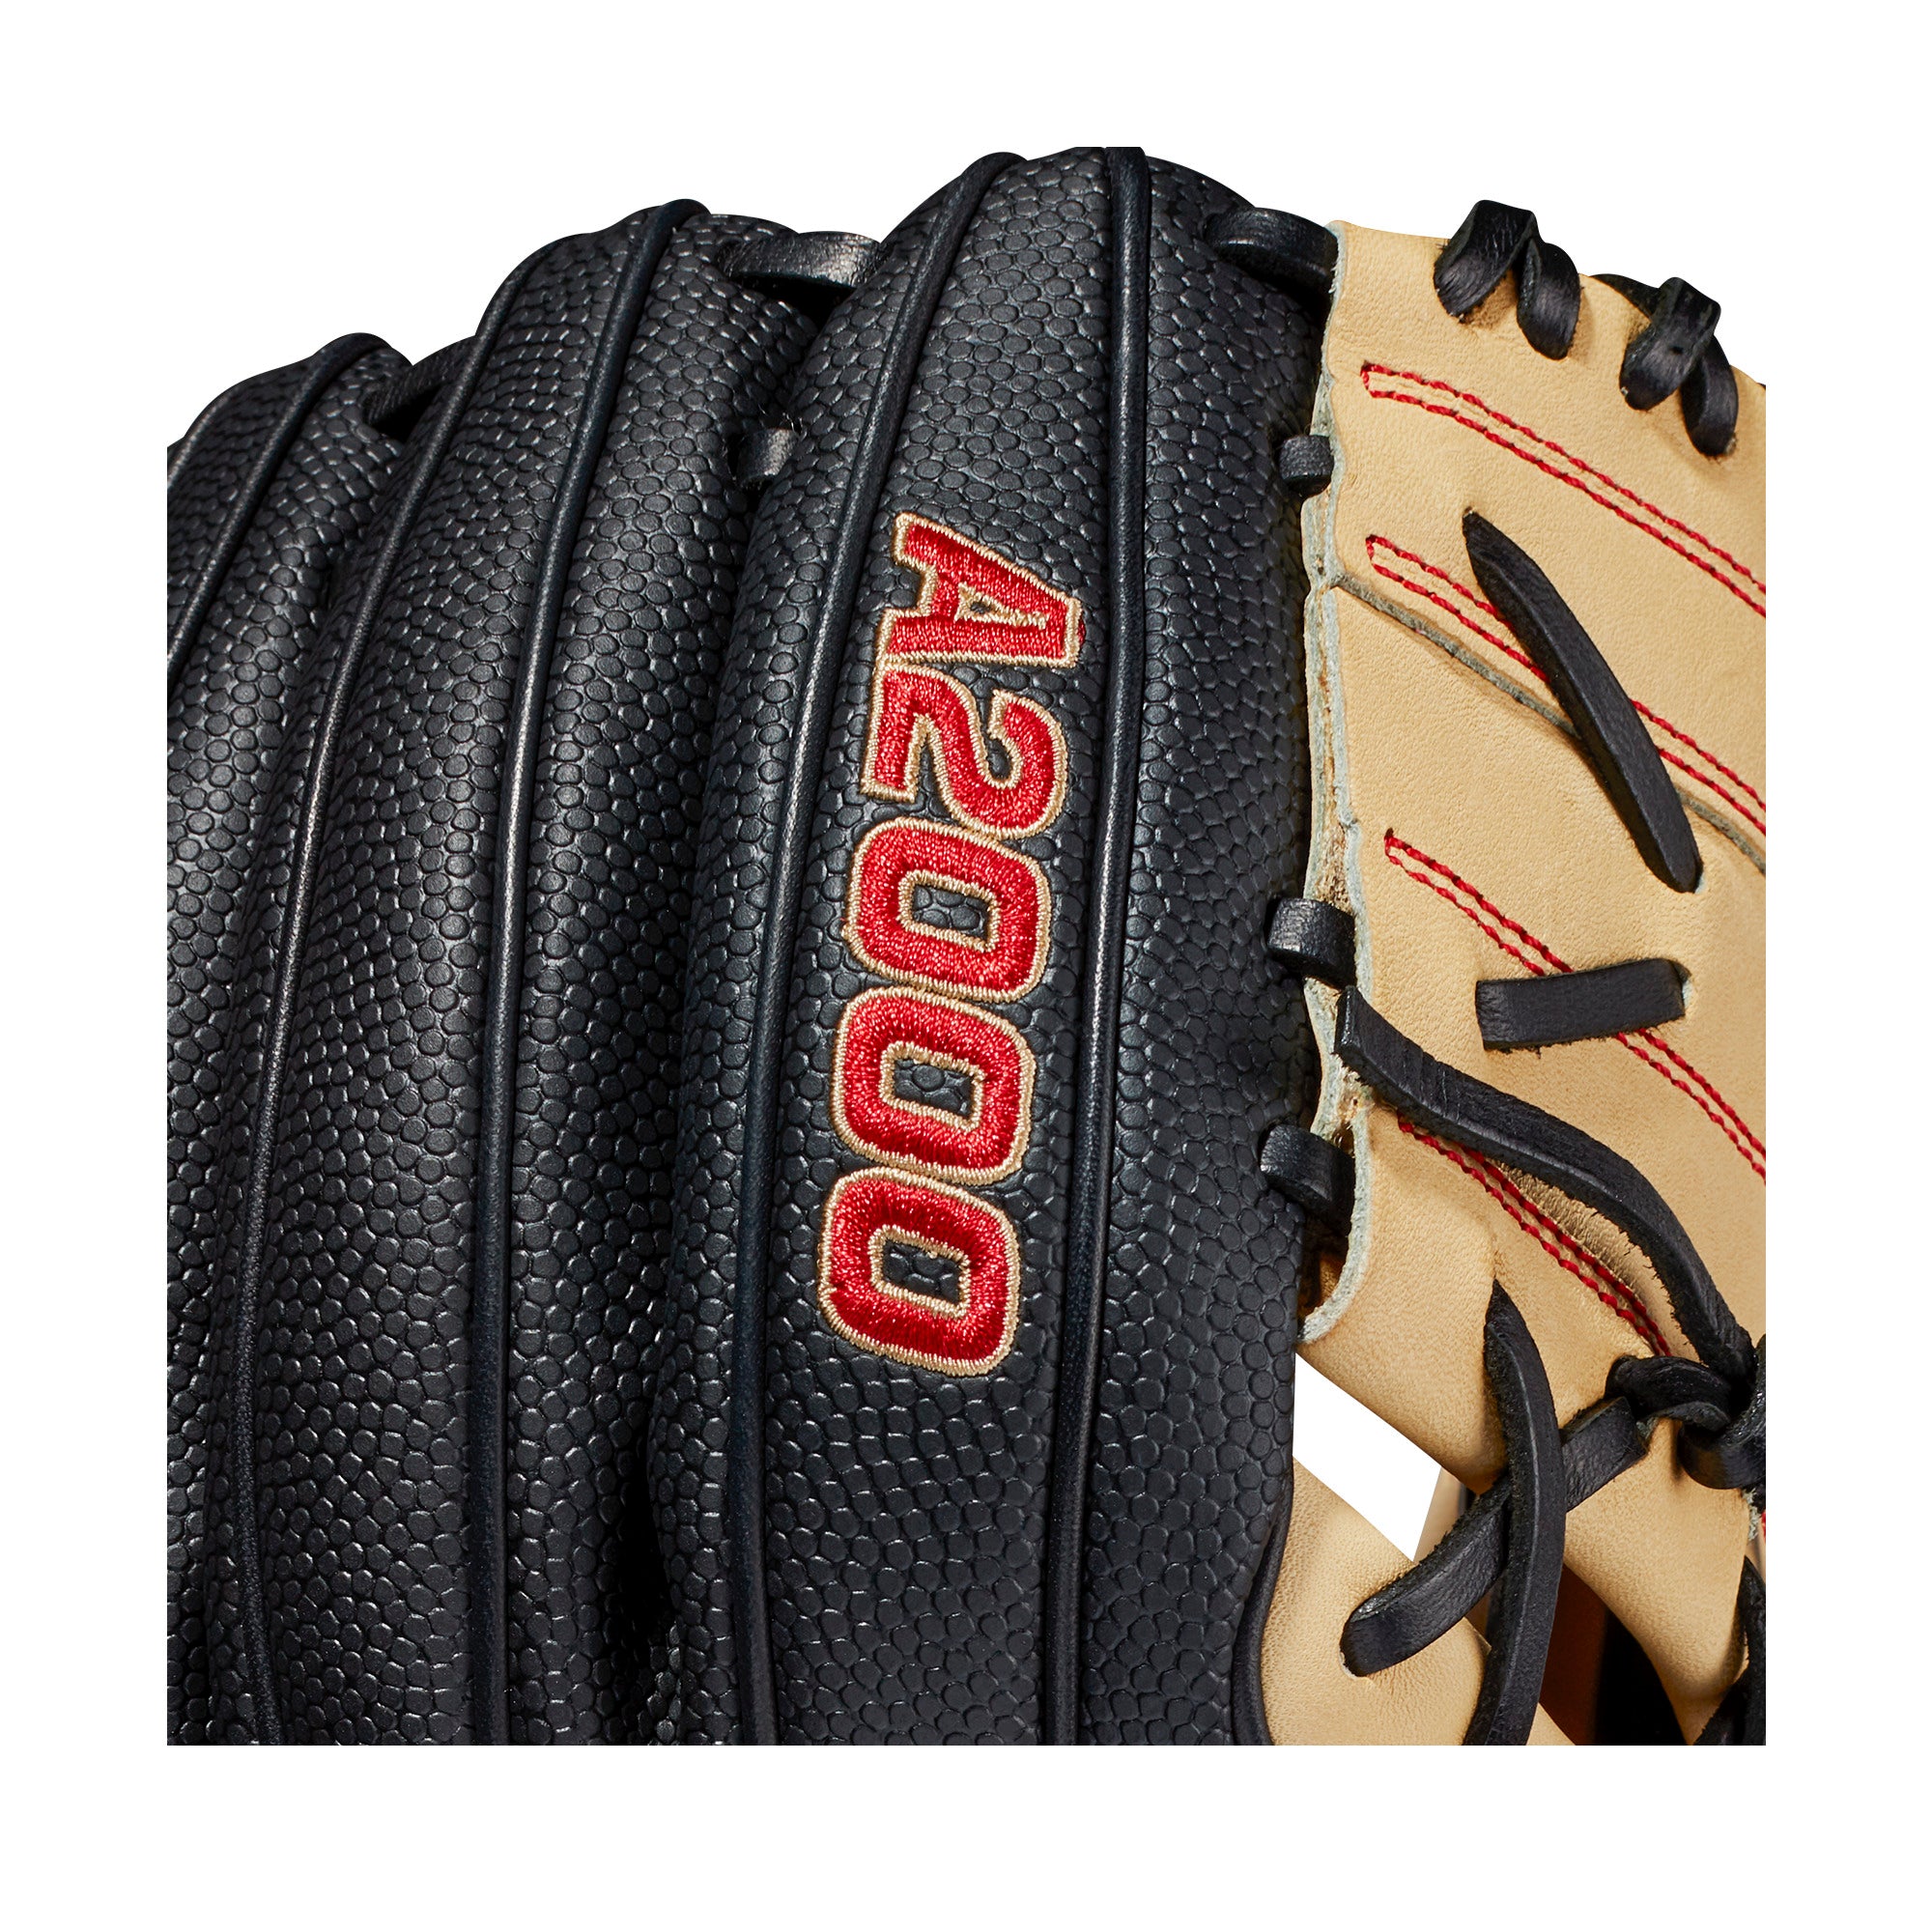 Wilson A2000 PFX2SS 11" Pedroia Fit Infield Baseball Glove Black/Blonde